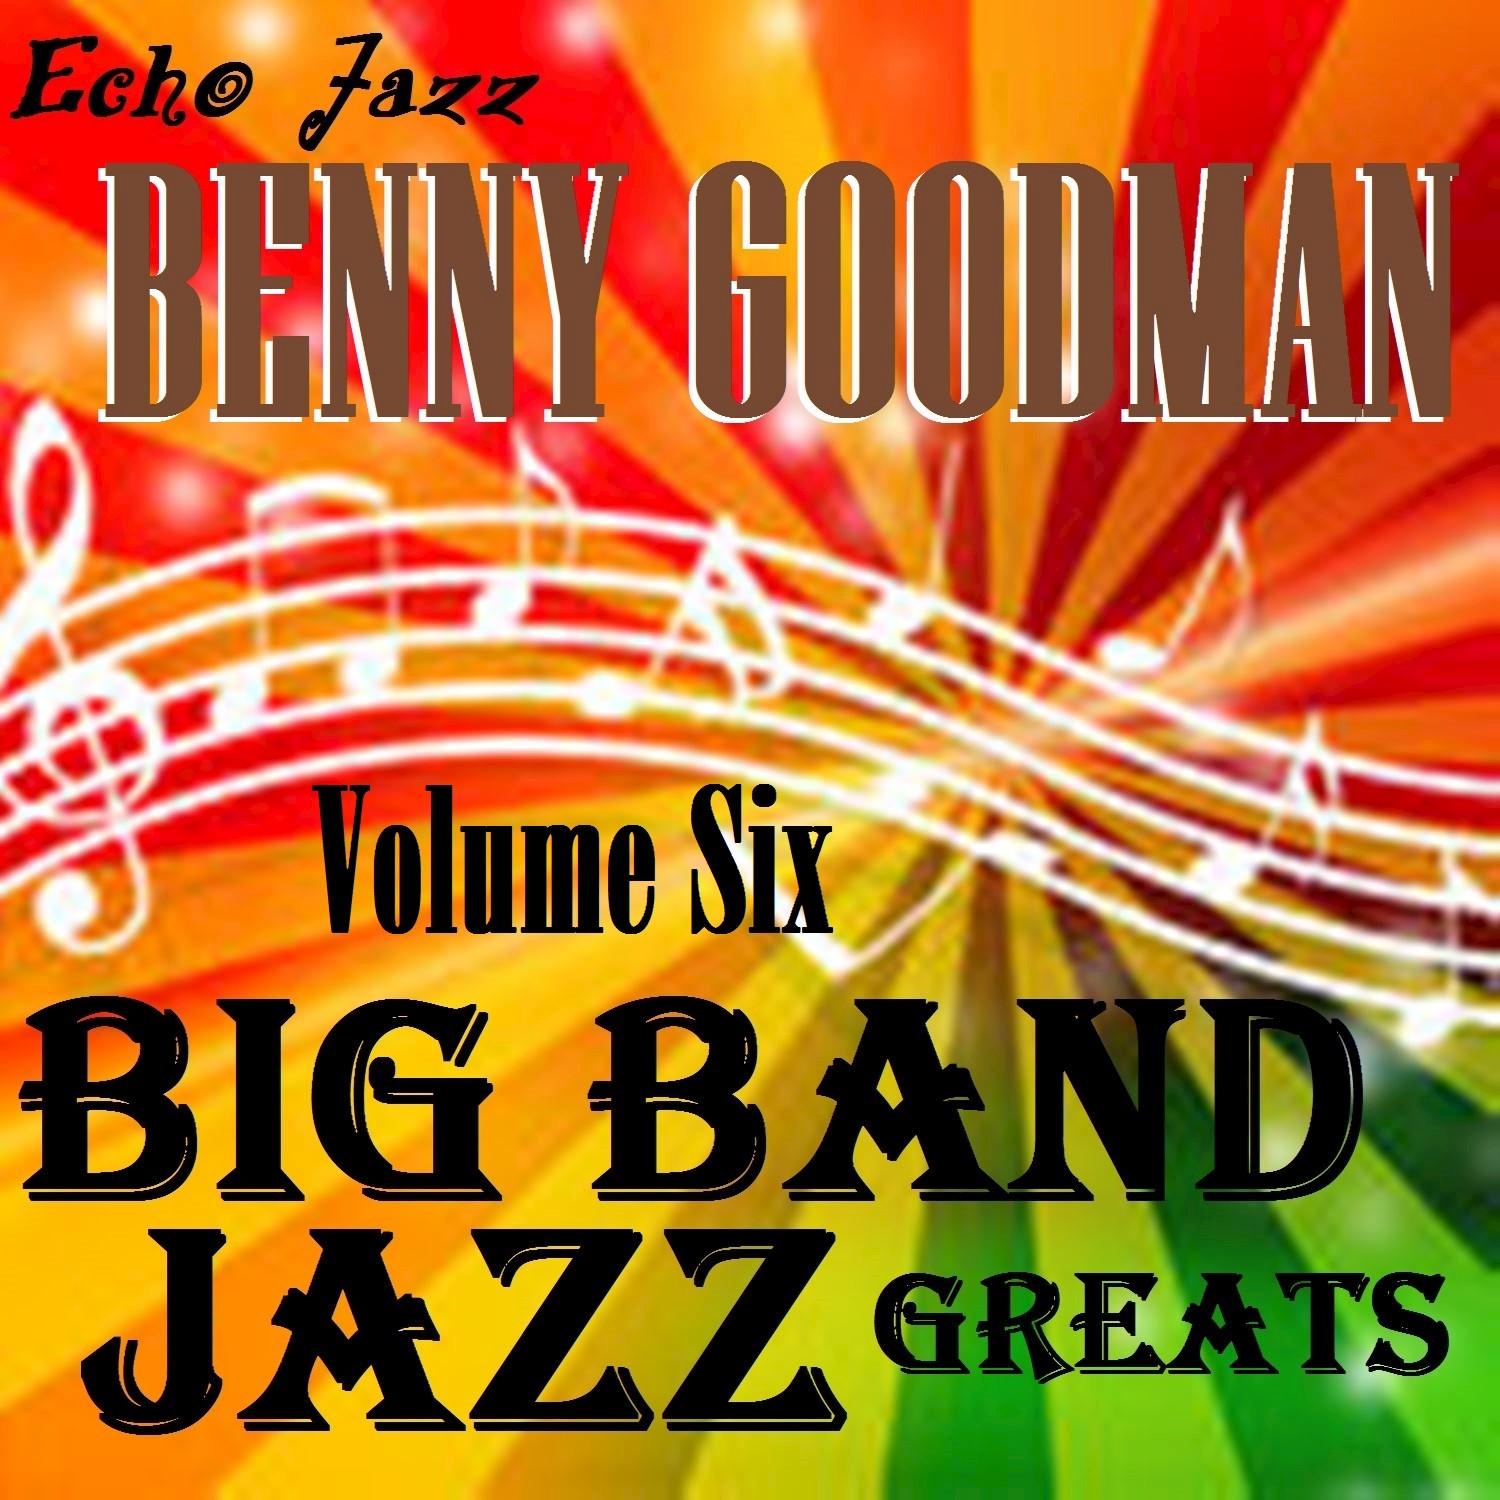 Big Band Jazz Greats, Vol. 6